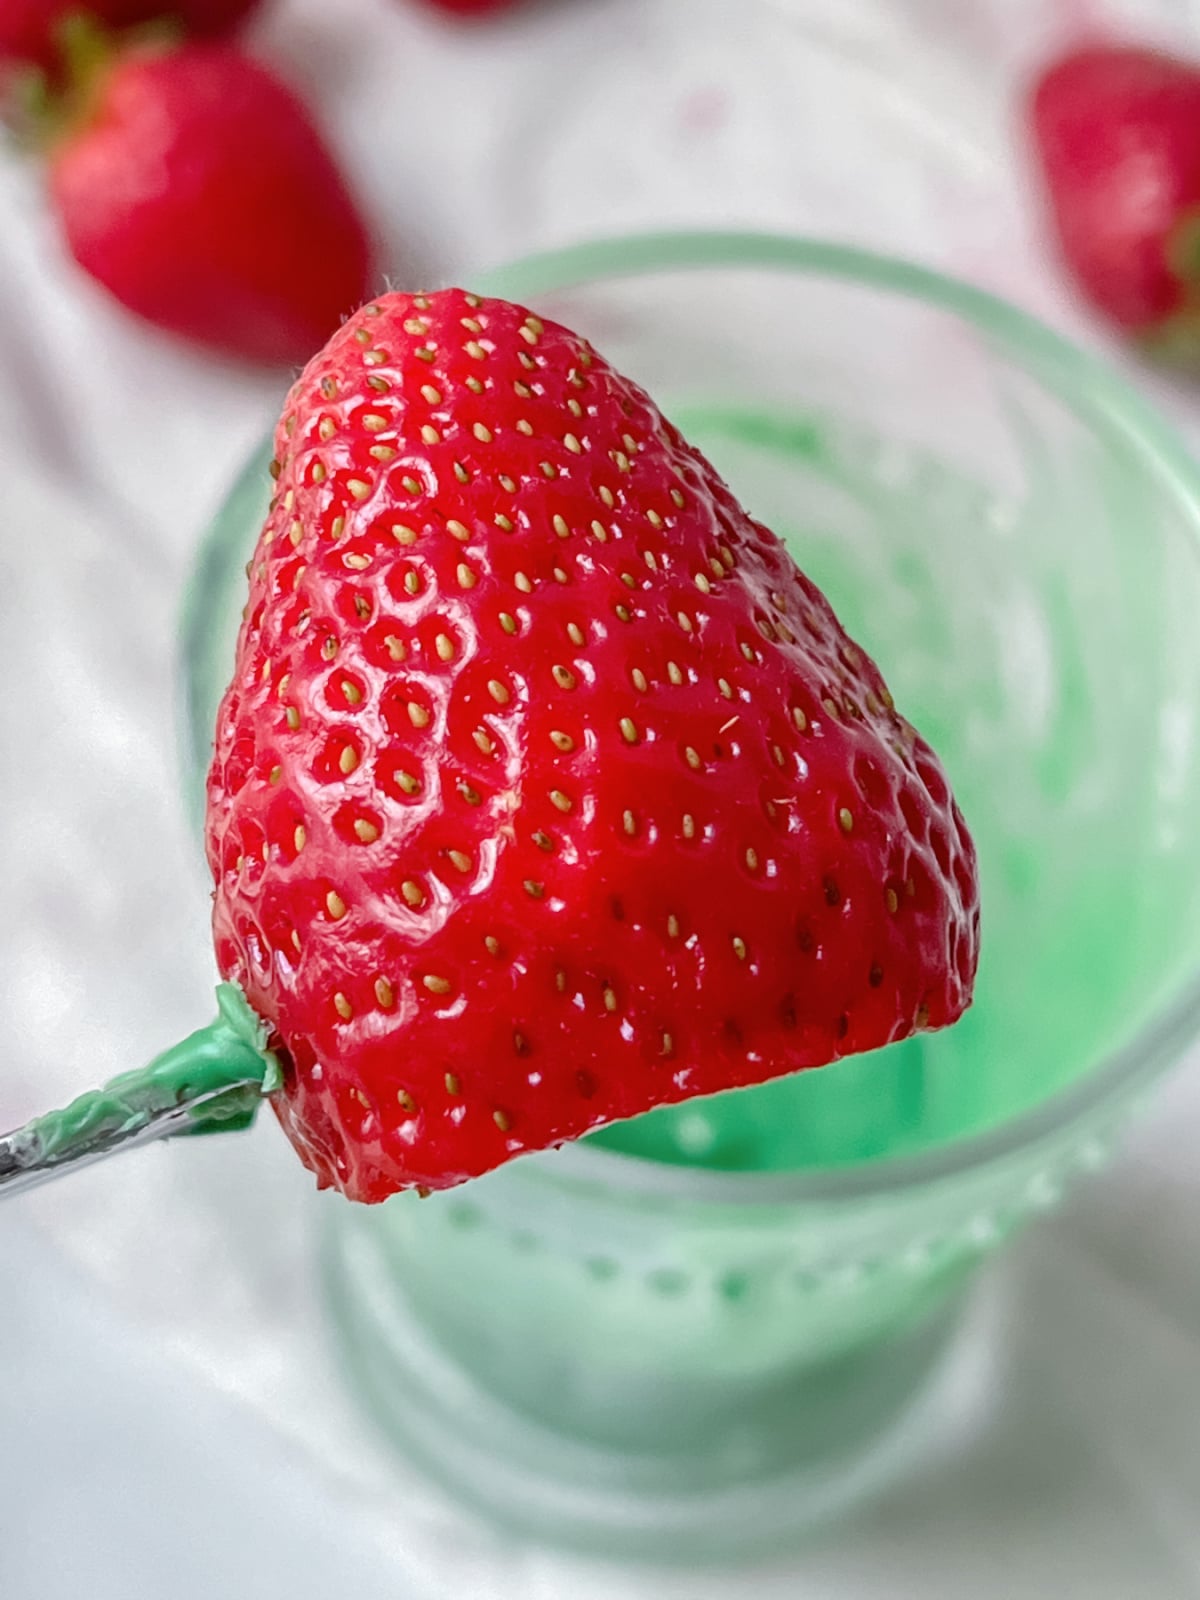 dip strawberries in green